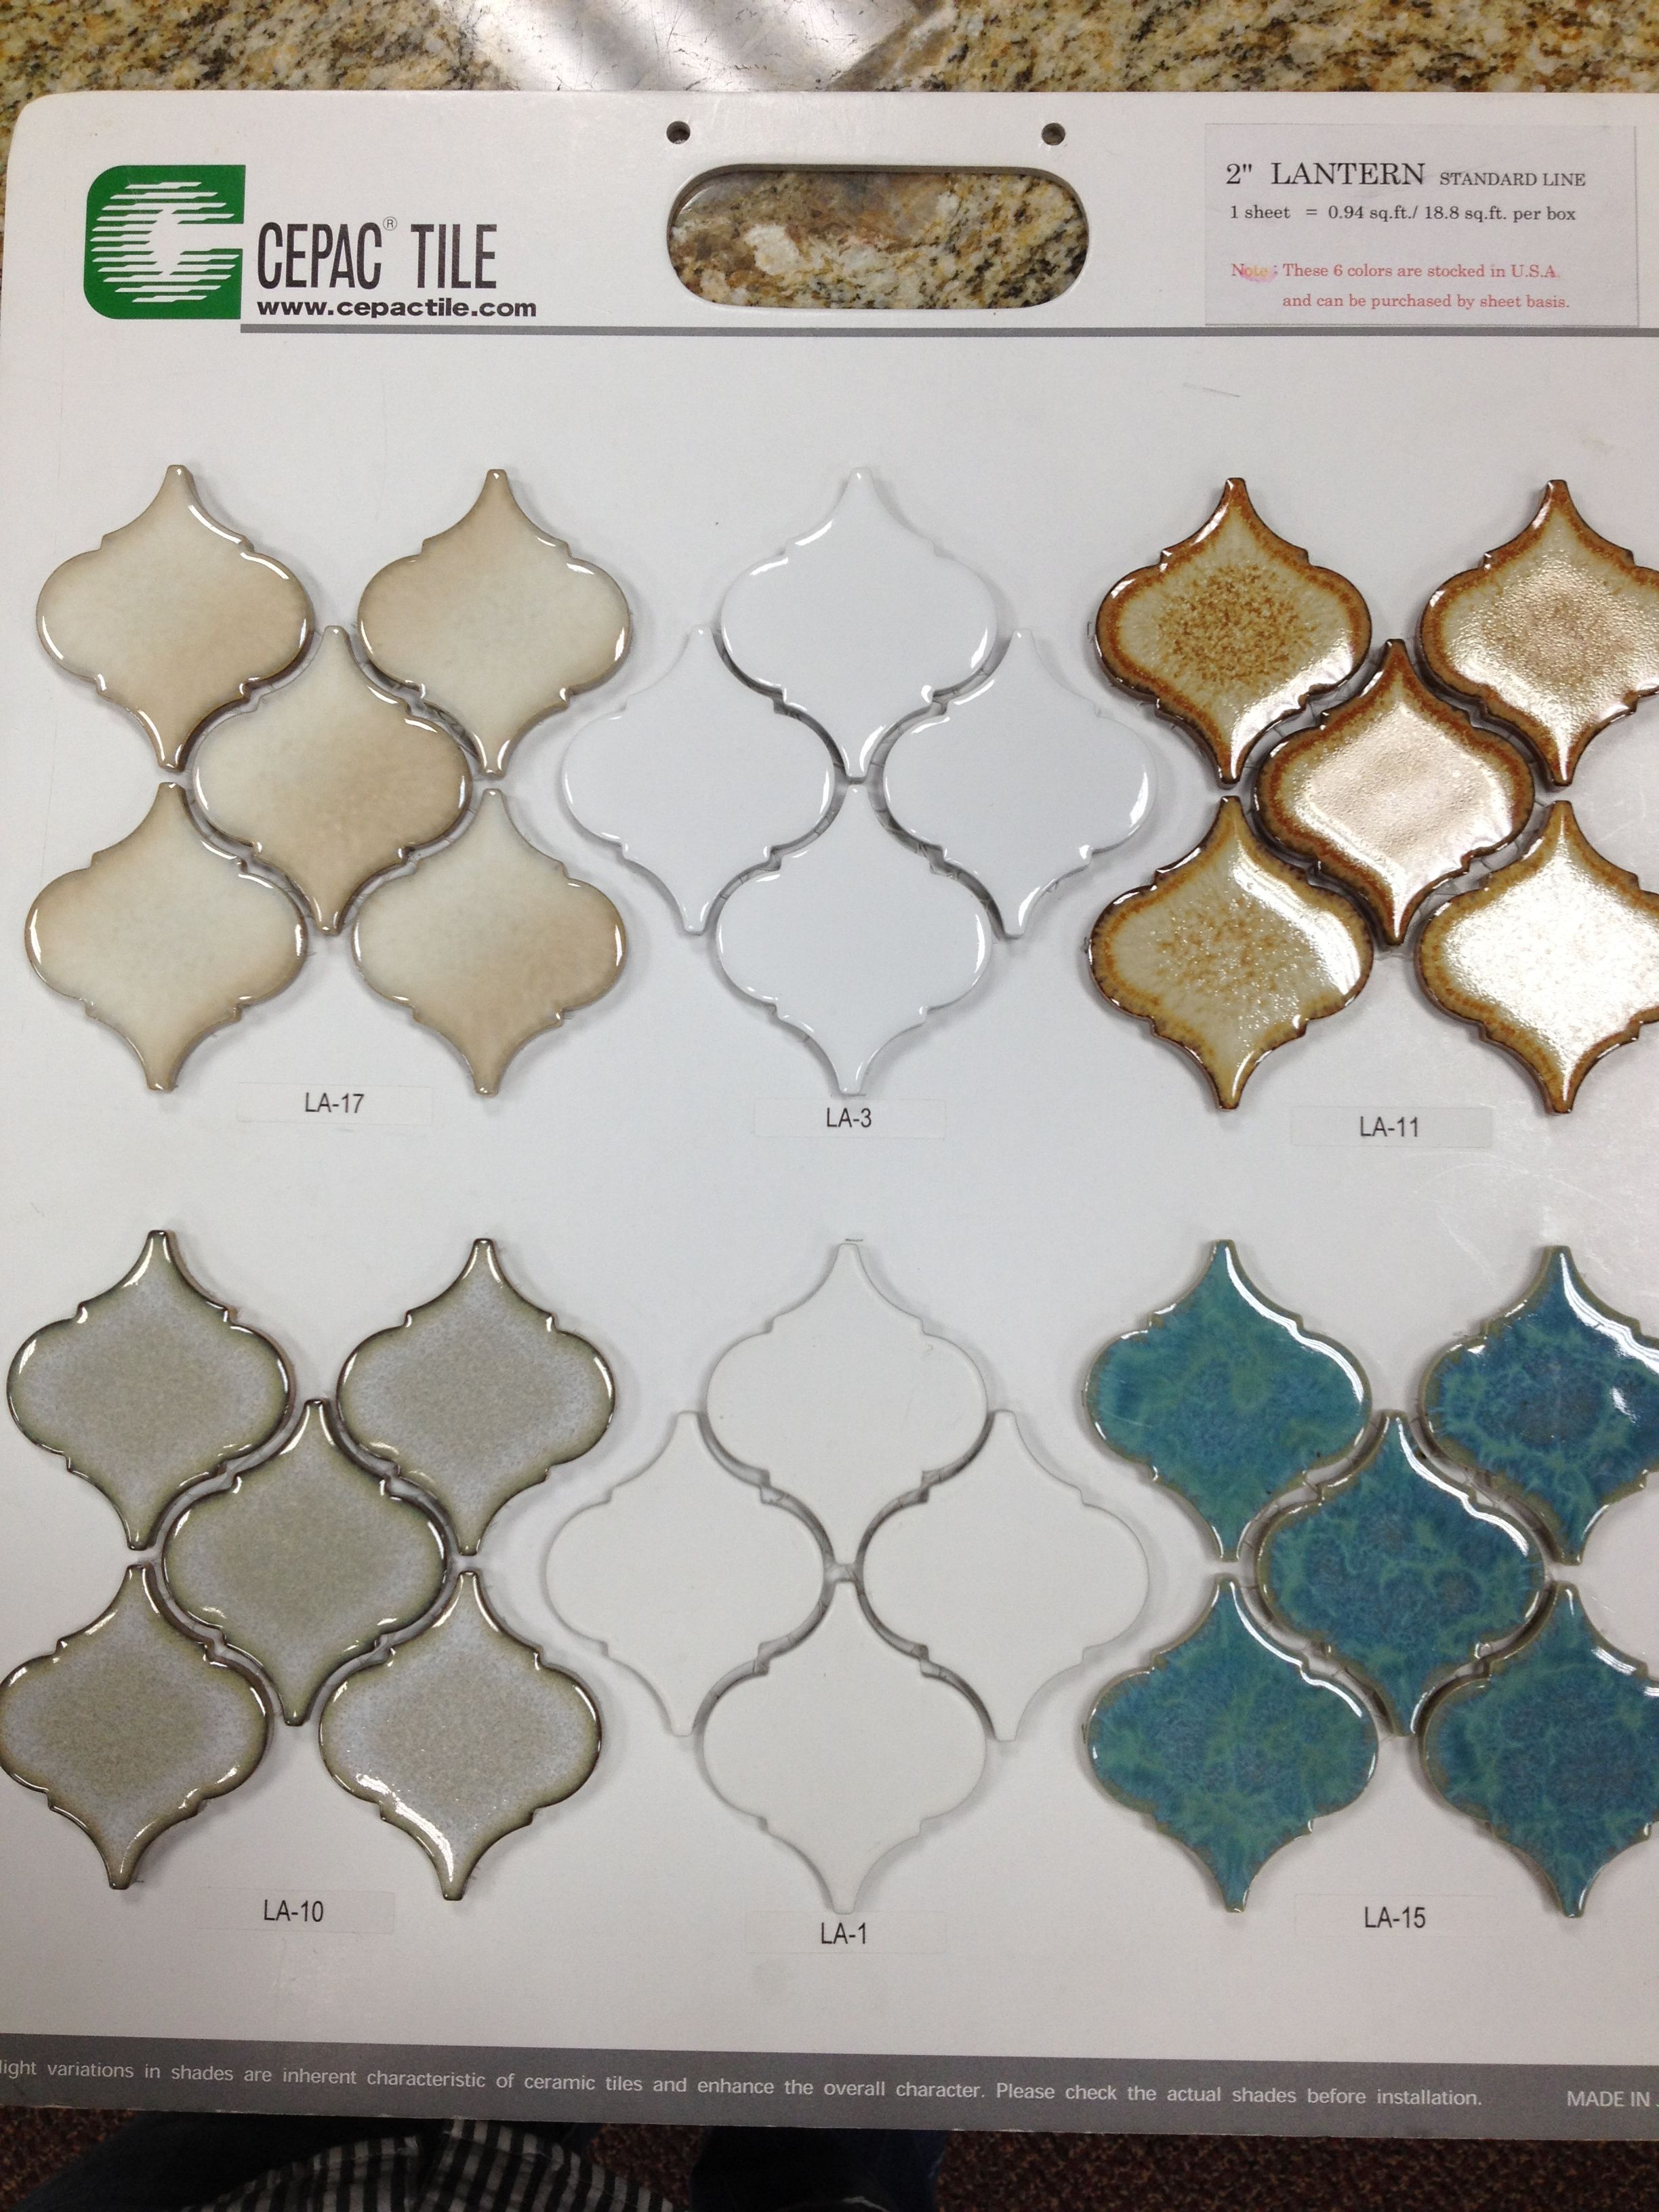 Glass morrocan style tile